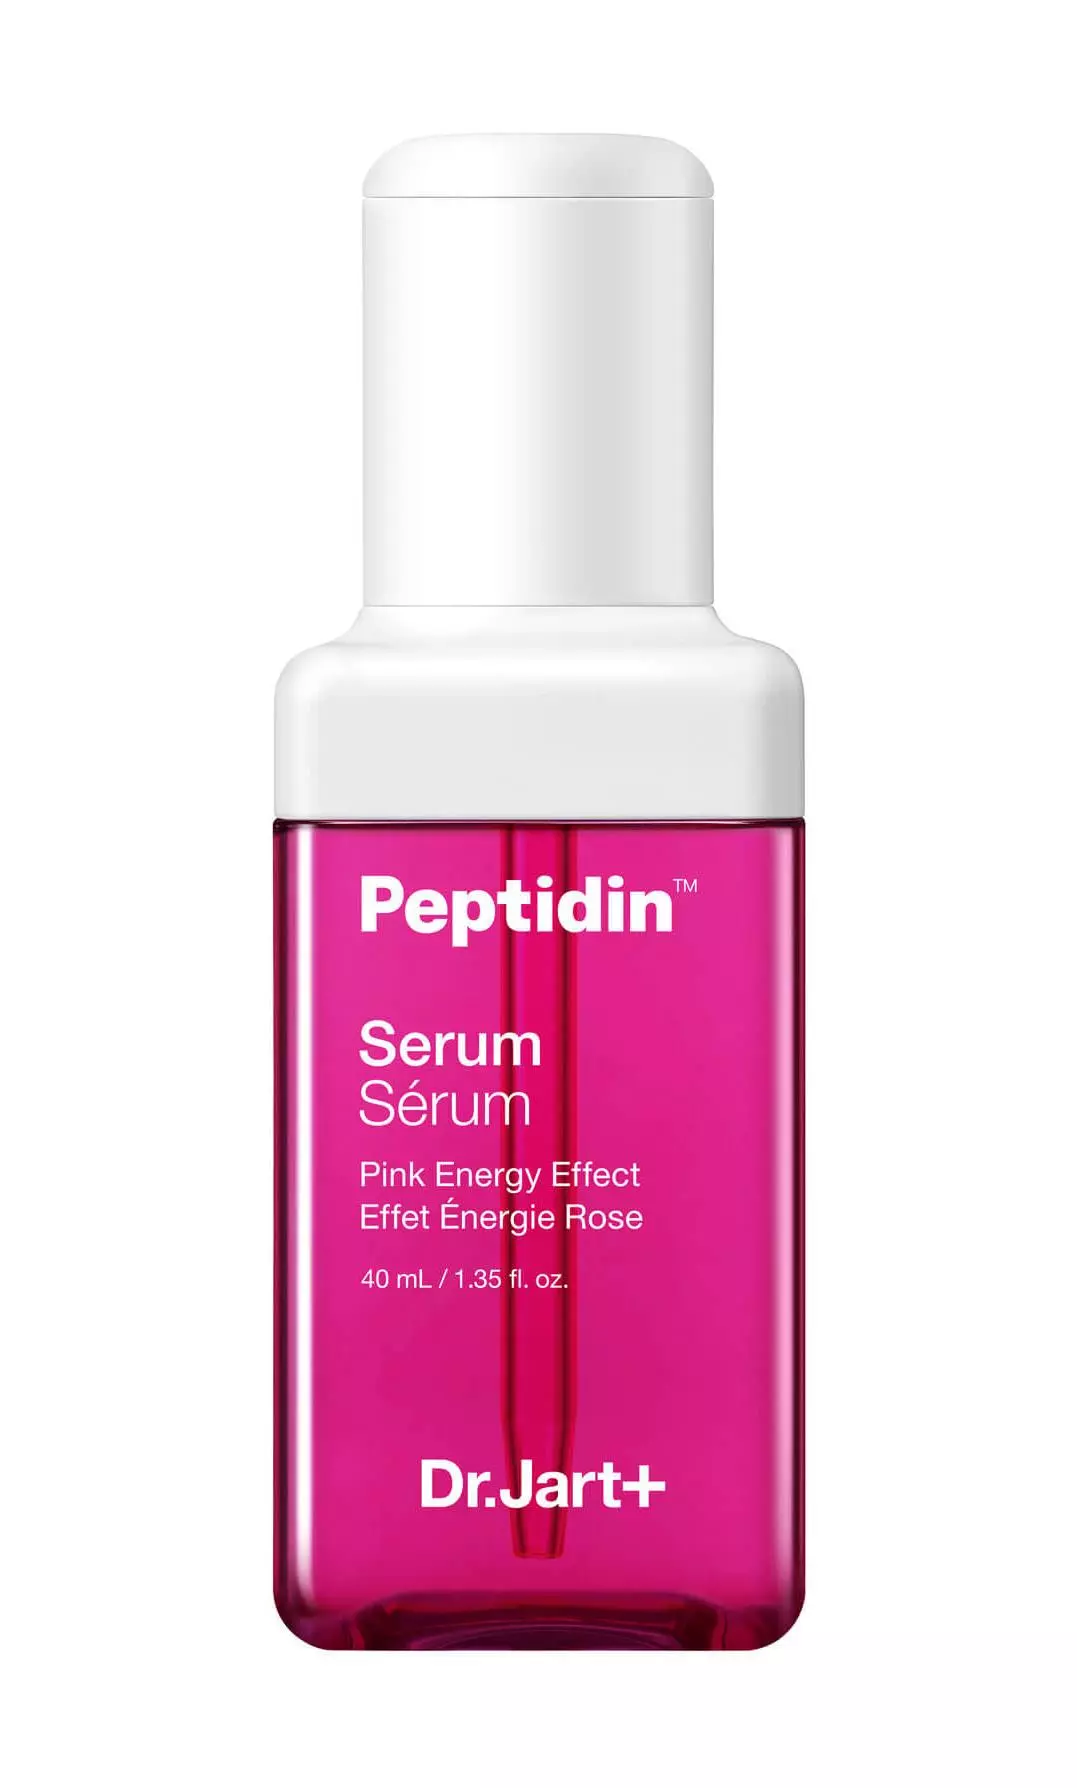 Peptidin Serum Pink Energy Effect в интернет-магазине Skinly